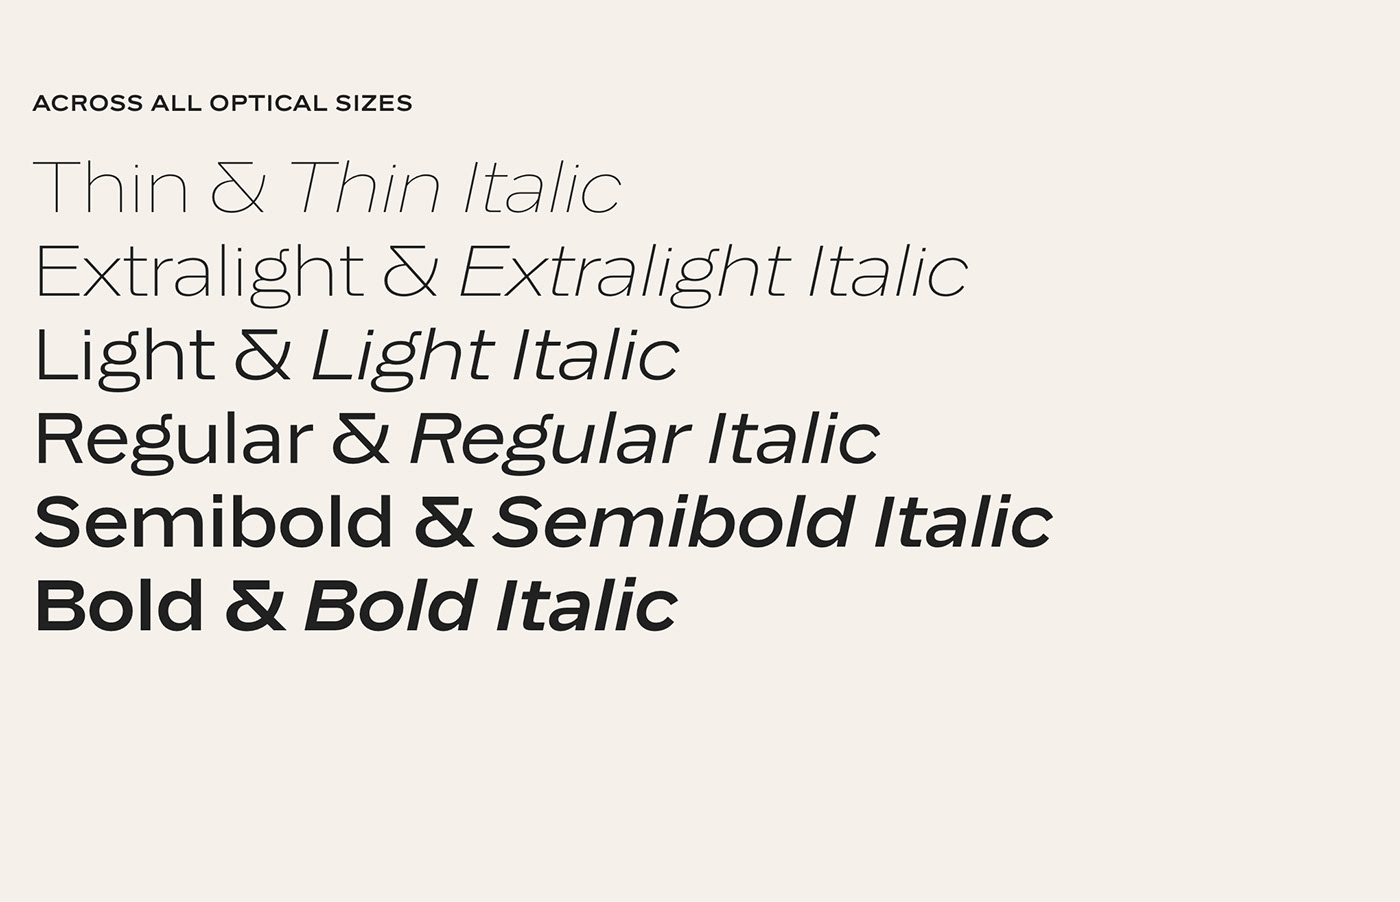 Display font foundry rework sans serif sociotype specimen type design Typeface typography  